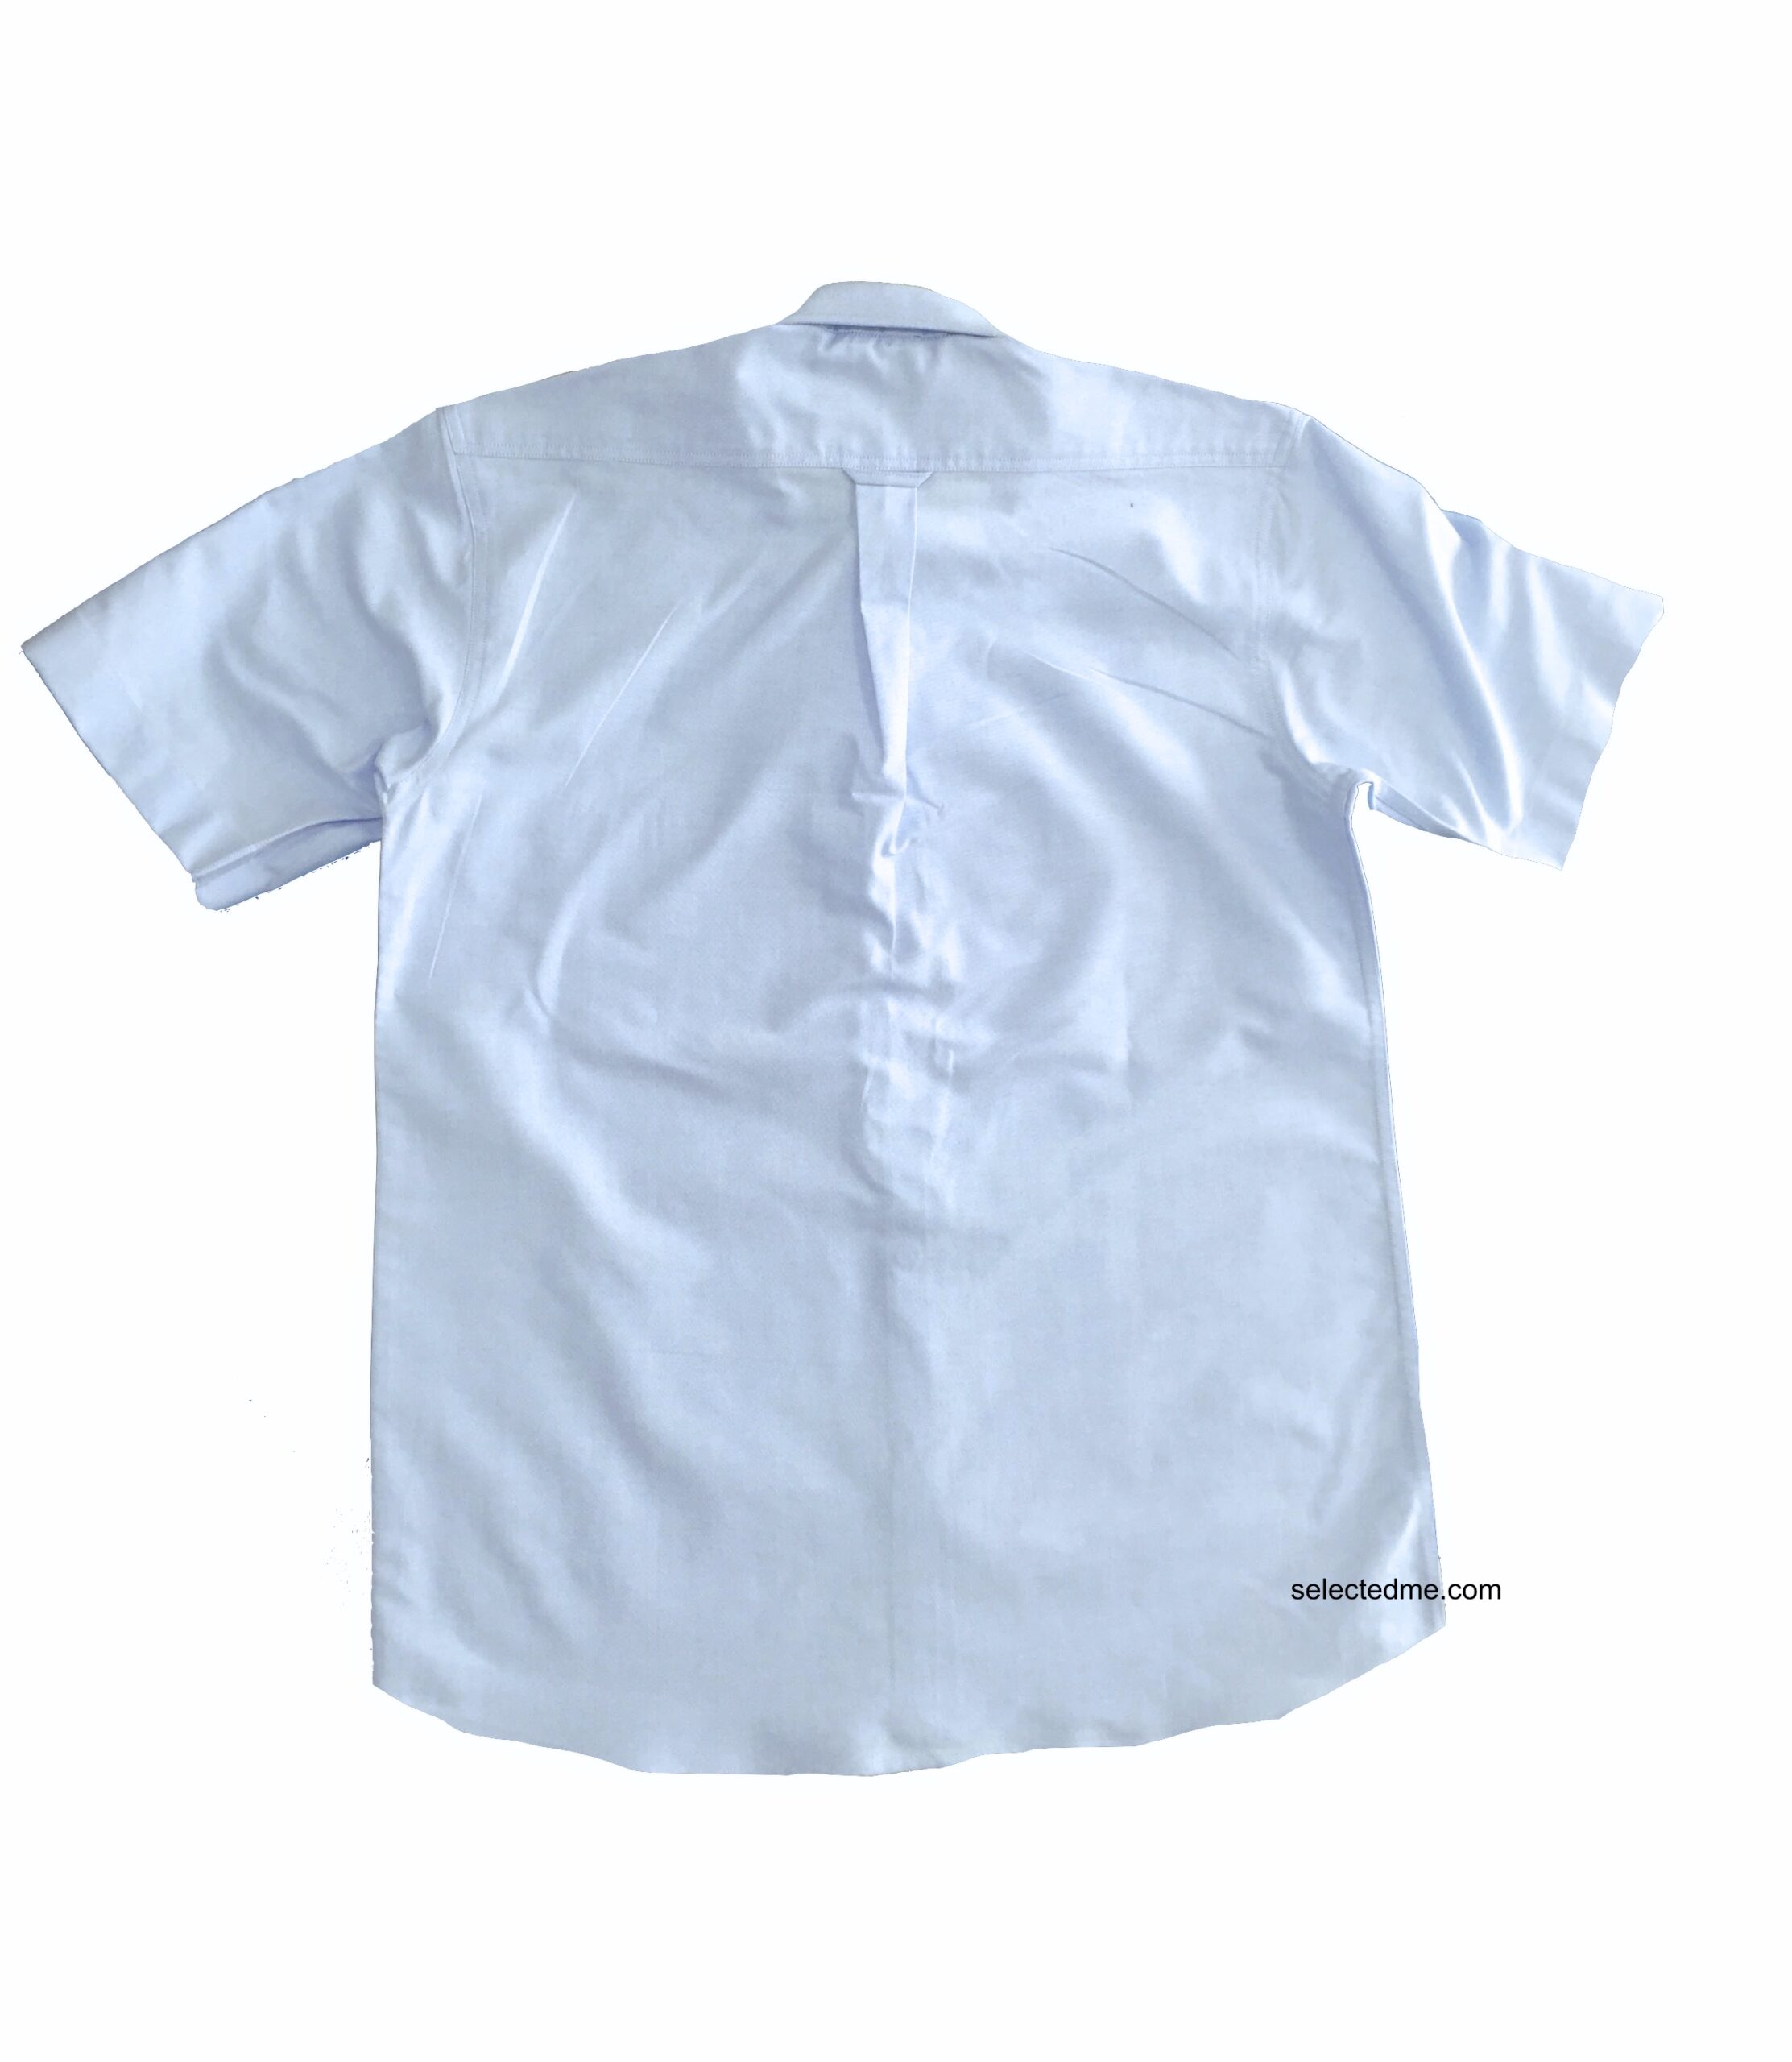 Uniform Shirts - School uniform shirts - Workwear shirts wholesale